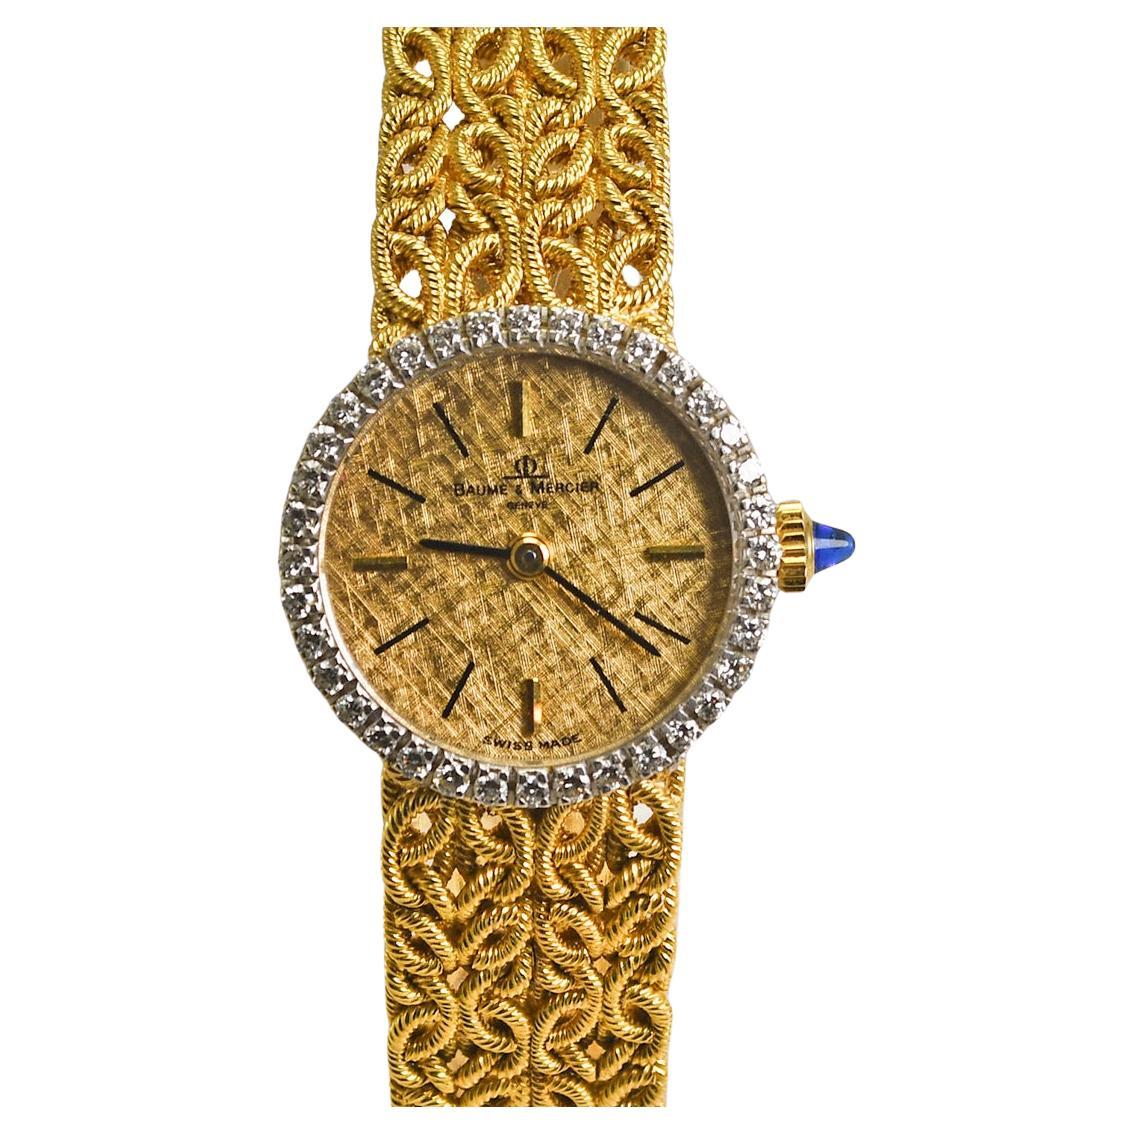 18K Yellow Gold Baume & Mercier with Diamond Bezel Watch 21mm